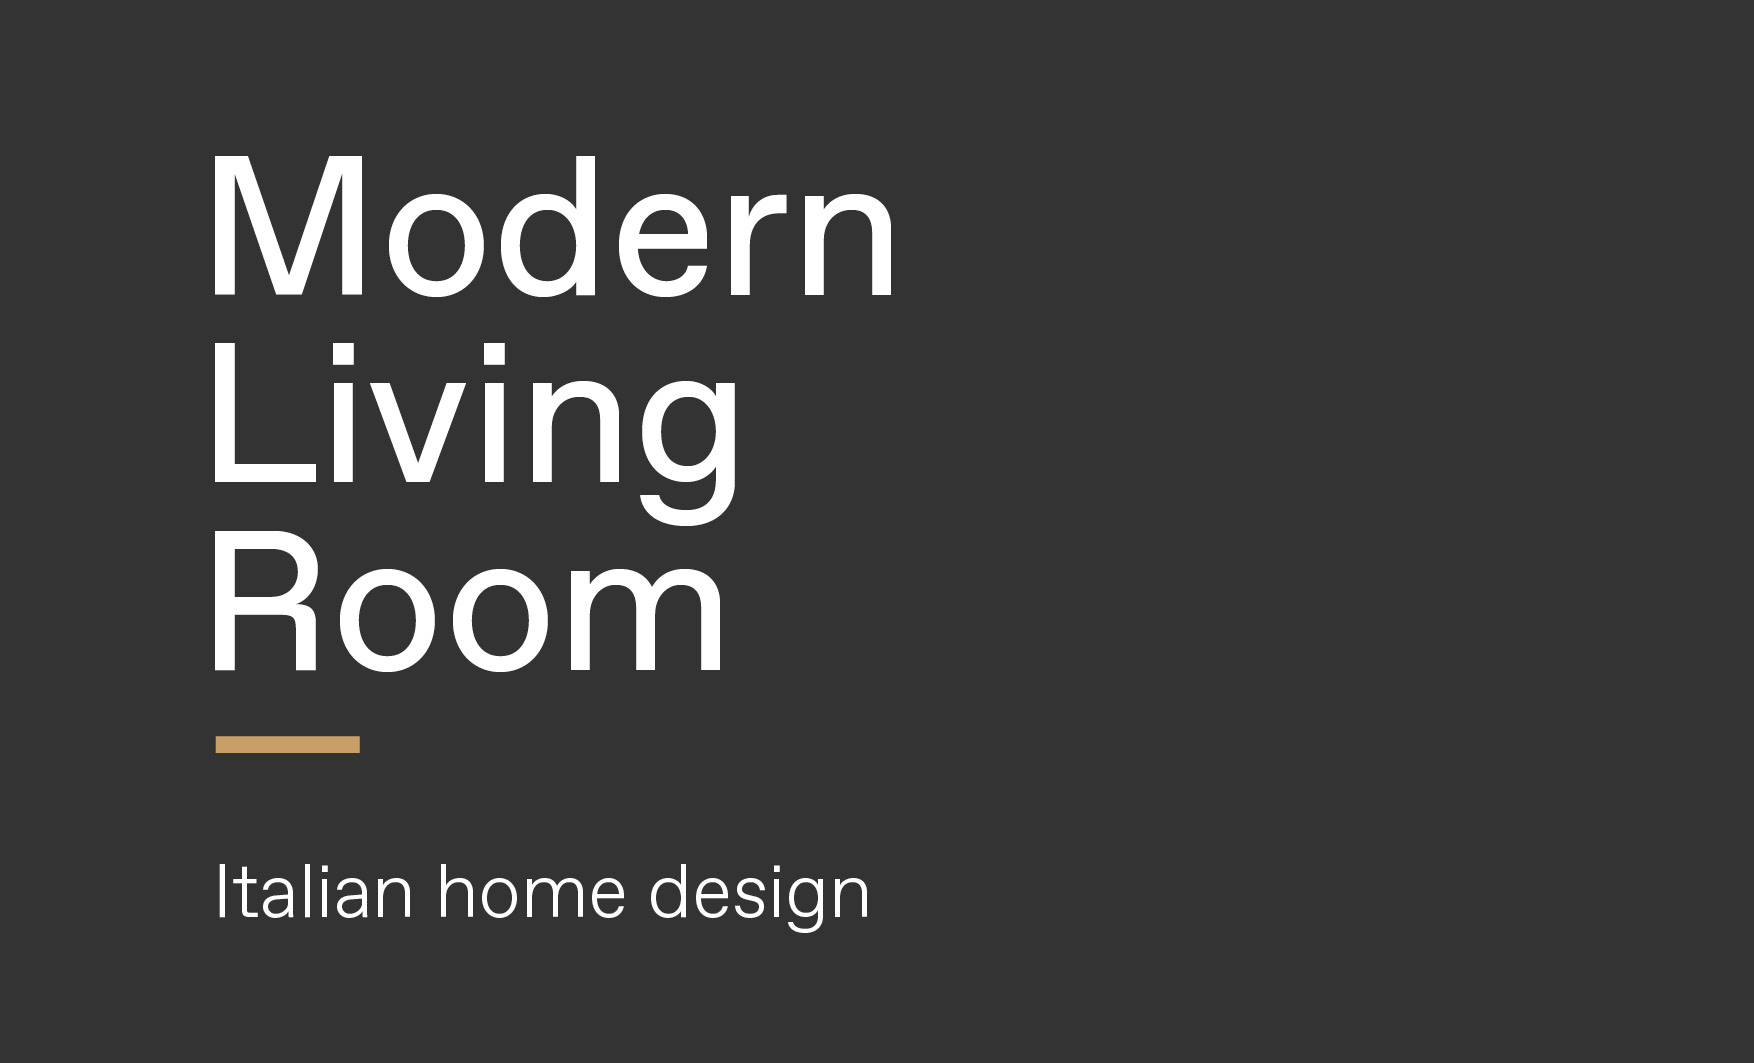 Italian living room decor for a modern living room concept developed by Esperiri Milano